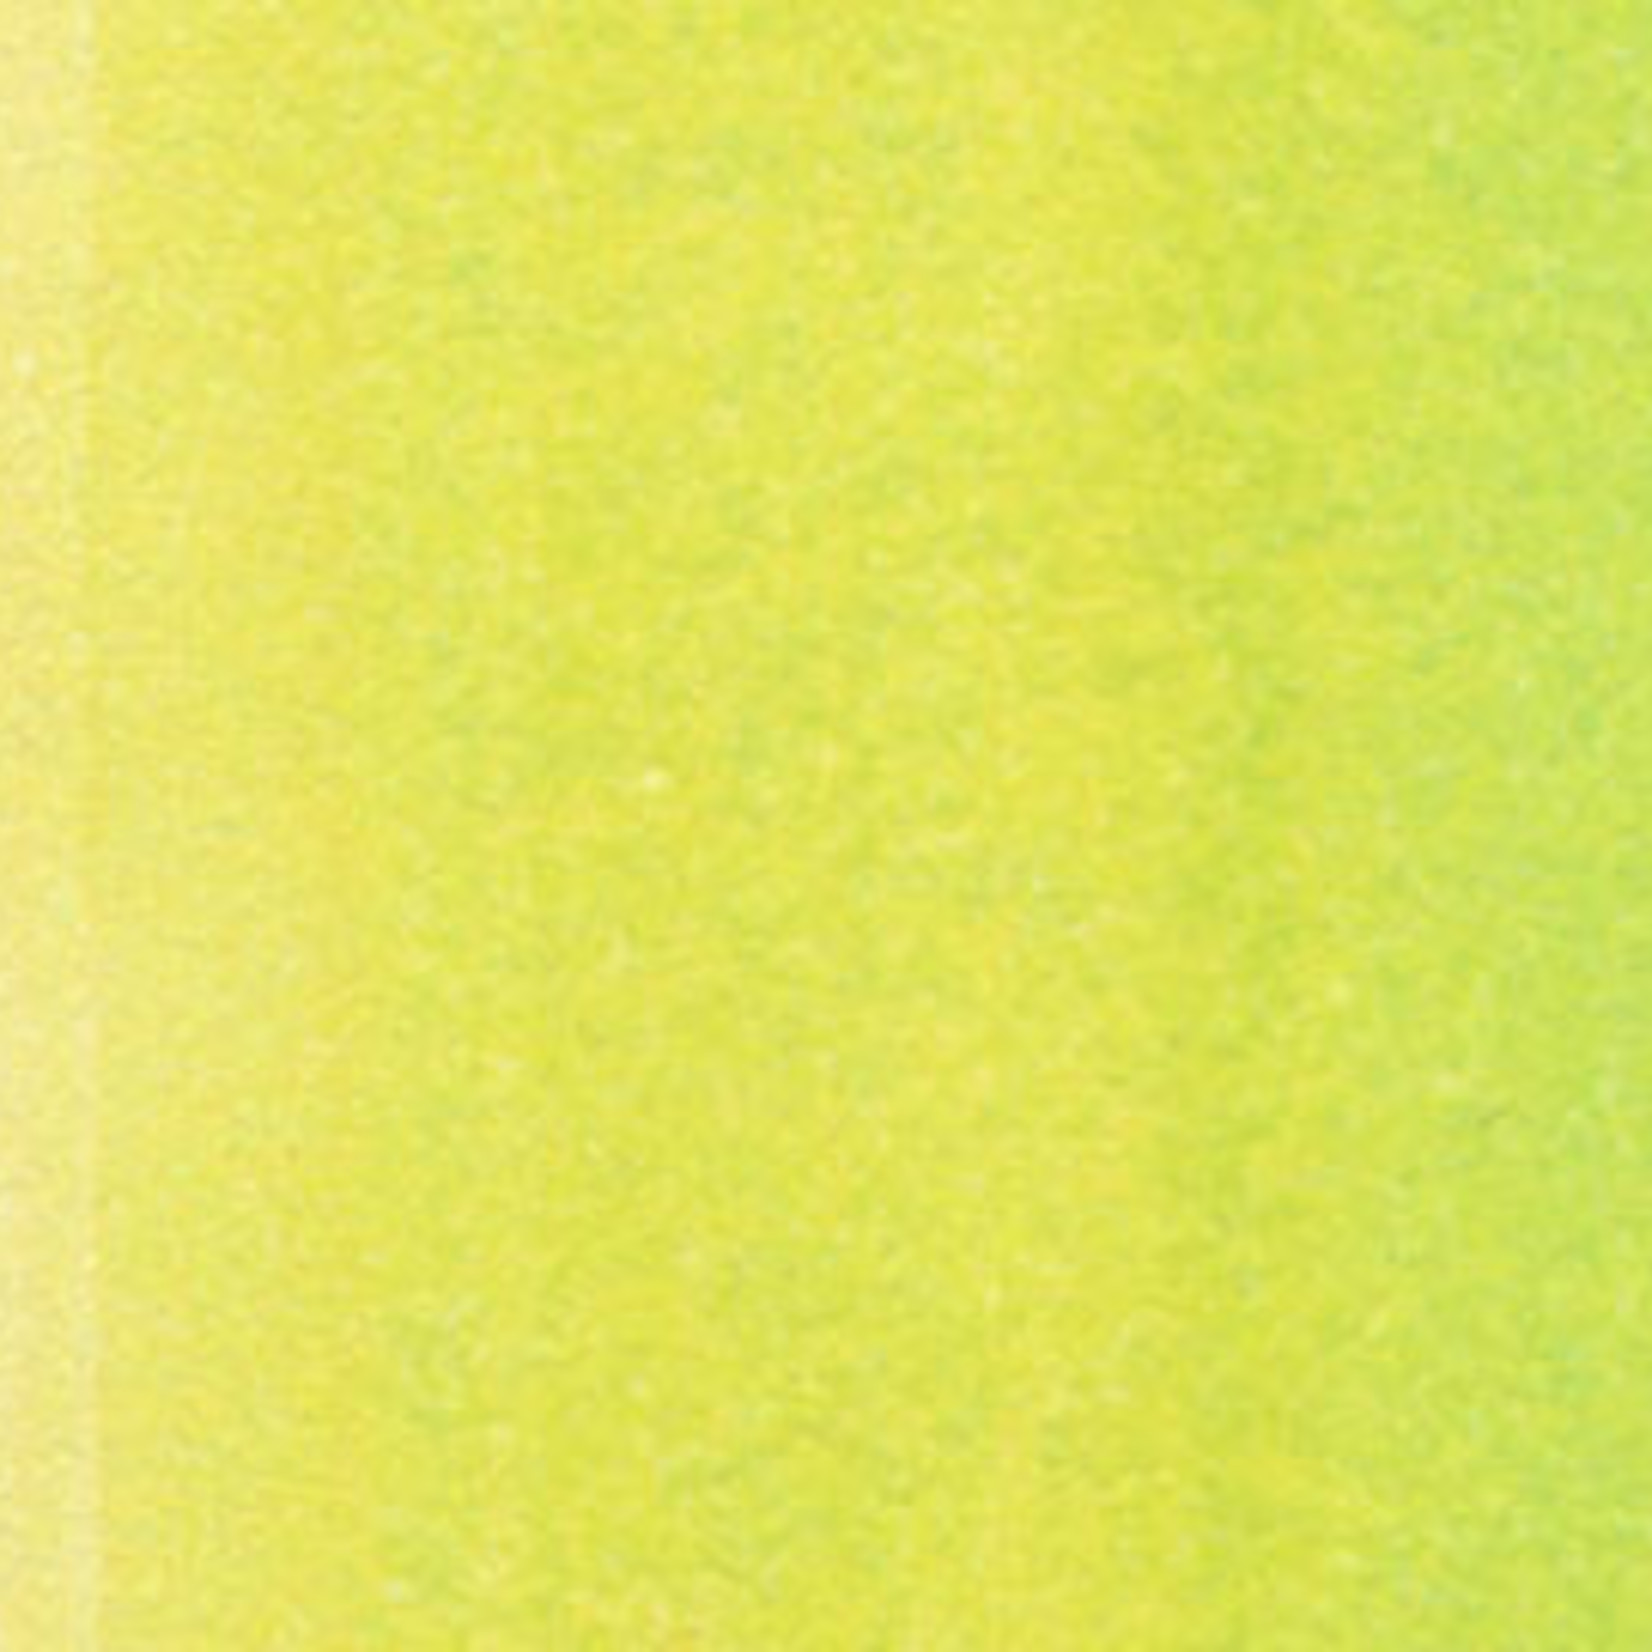 COPIC COPIC SKETCH YG01 GREEN BICE